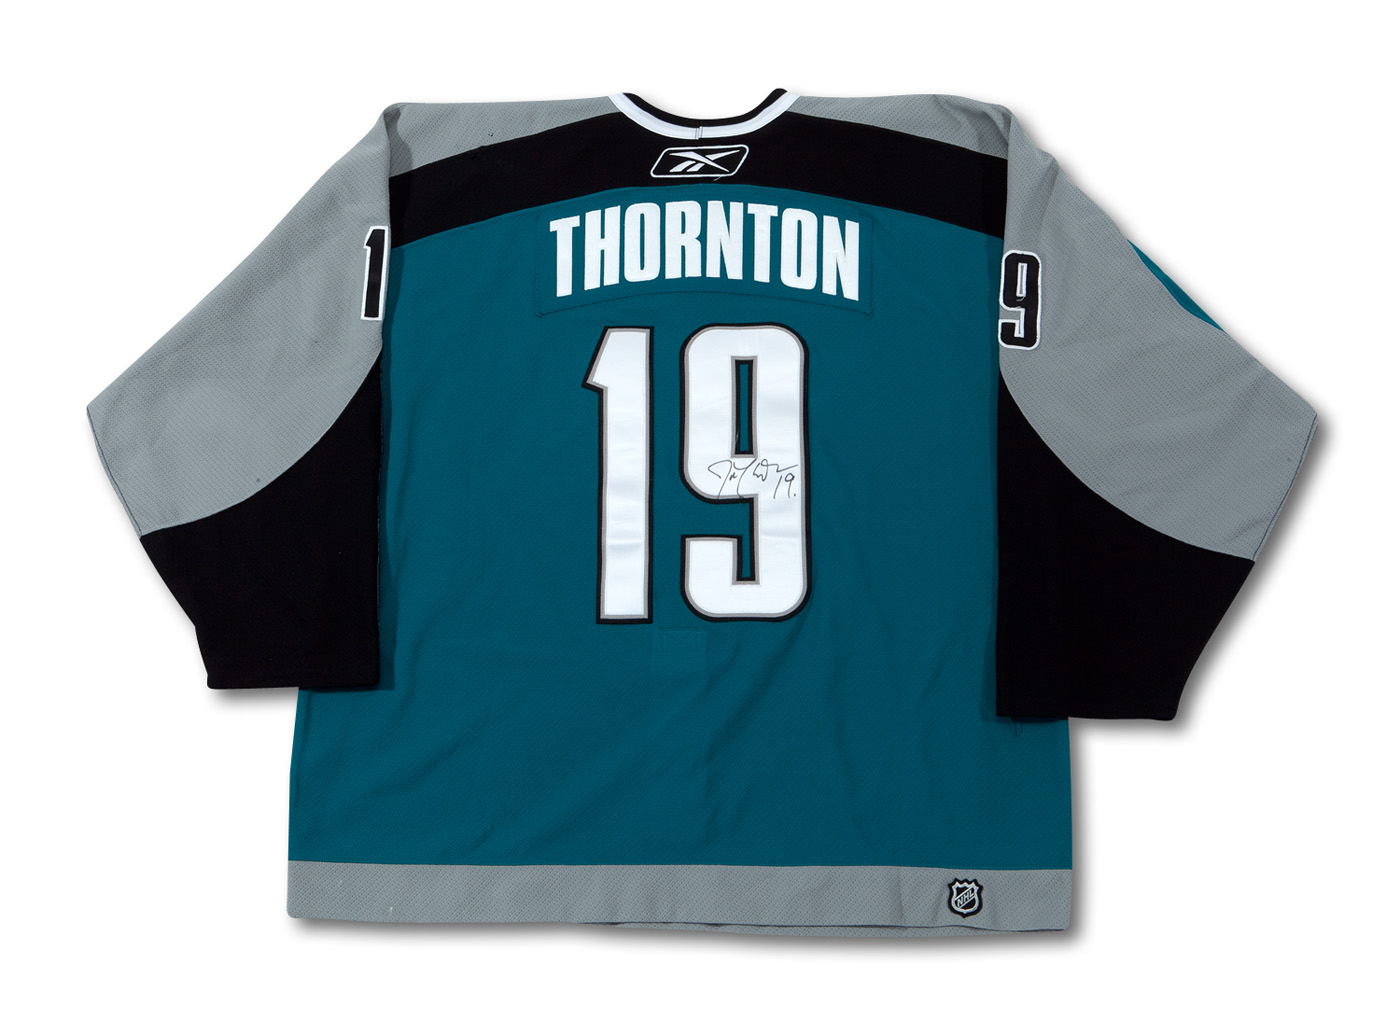 2007-08 Joe Thornton San Jose Sharks Autographed Authentic All Star Jersey  – Reebok Letter